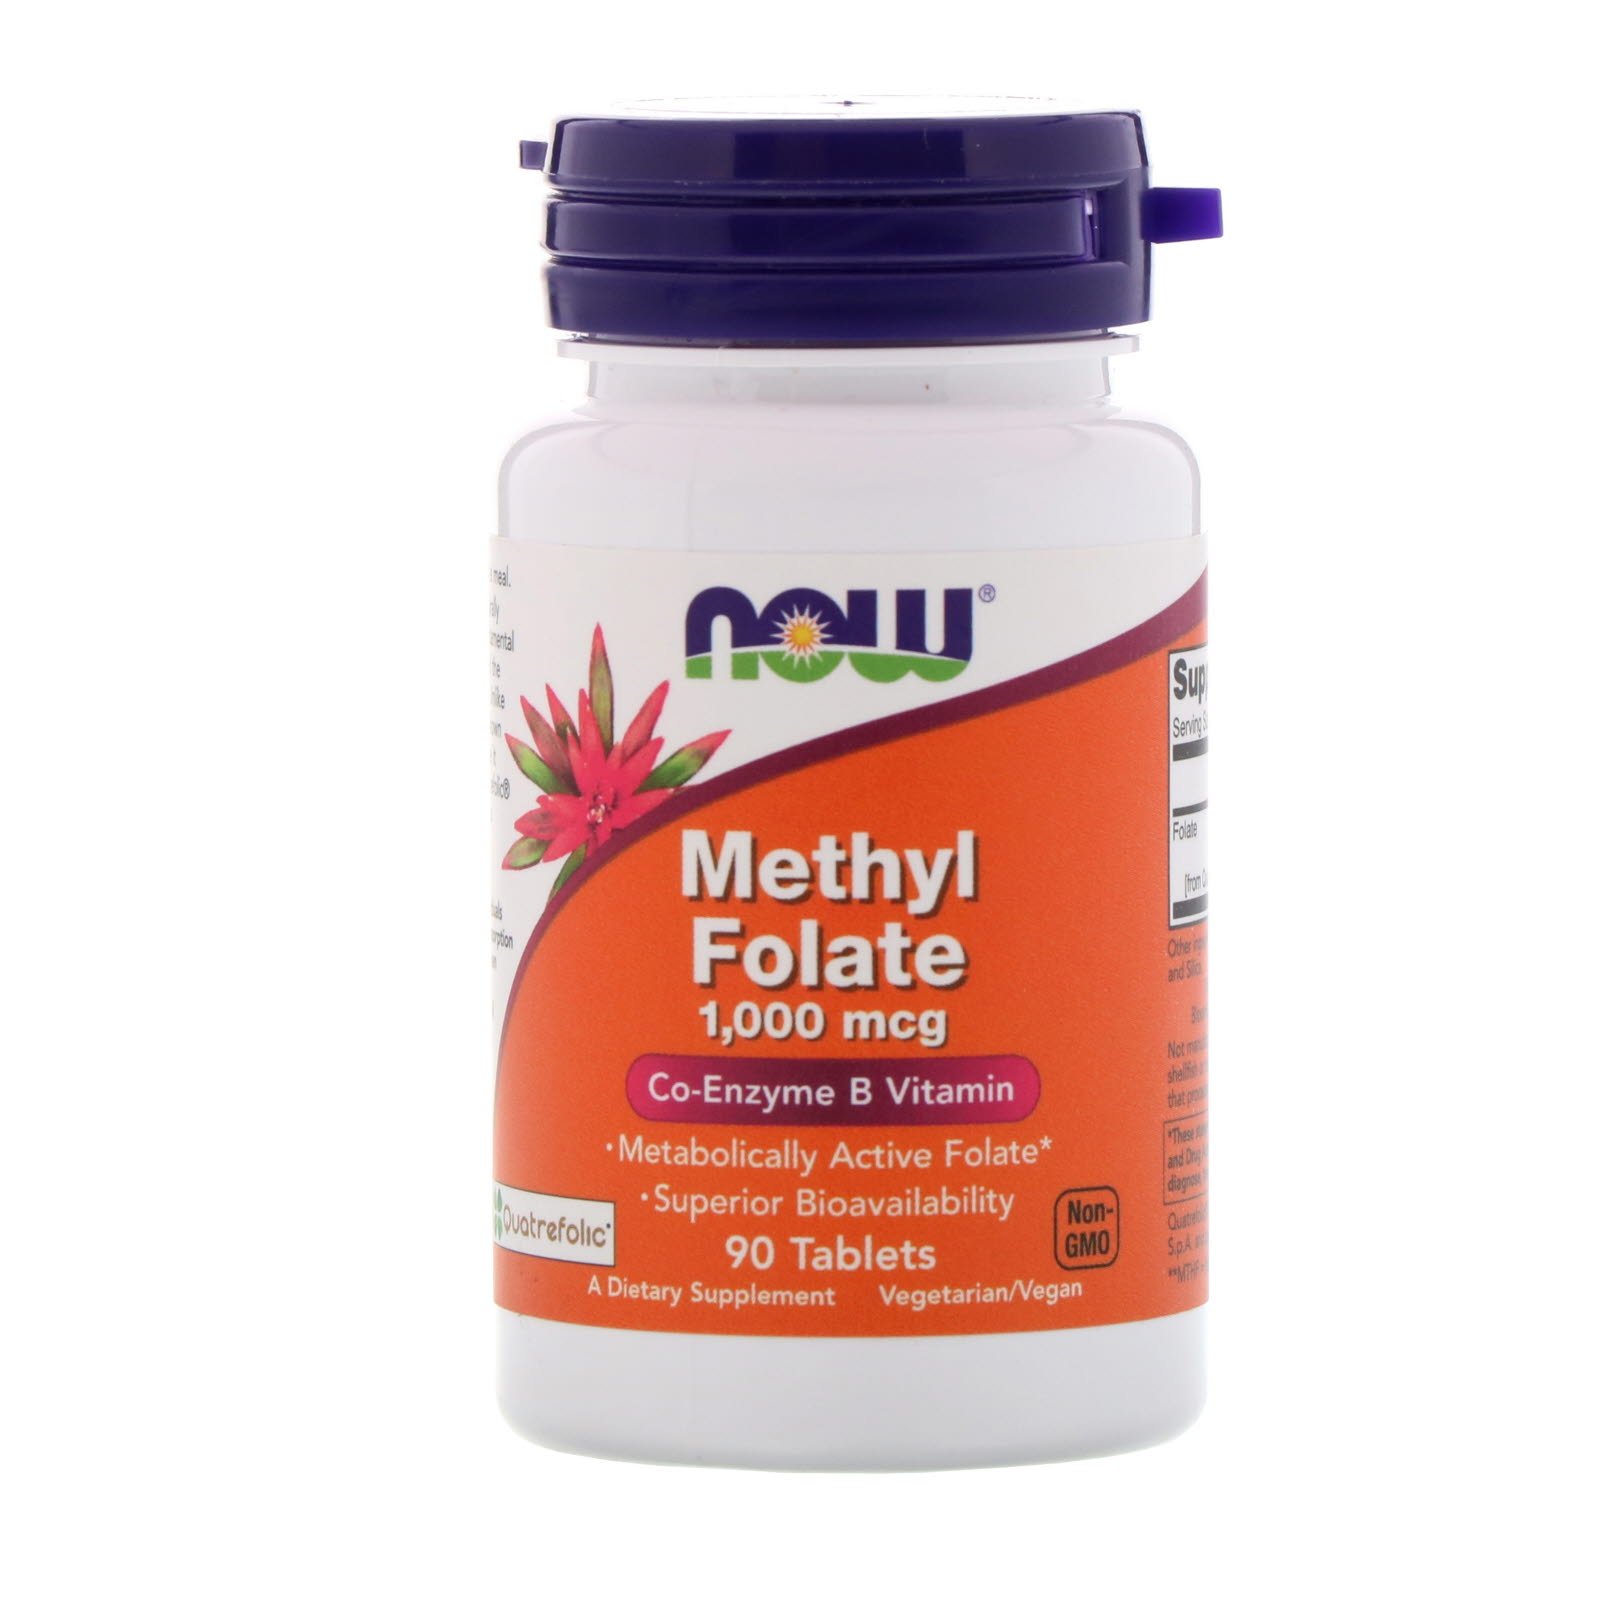 Methyl Folate, Метил Фолат, Витамин Б Коэнзим 1000 мкг - 90 таблеток